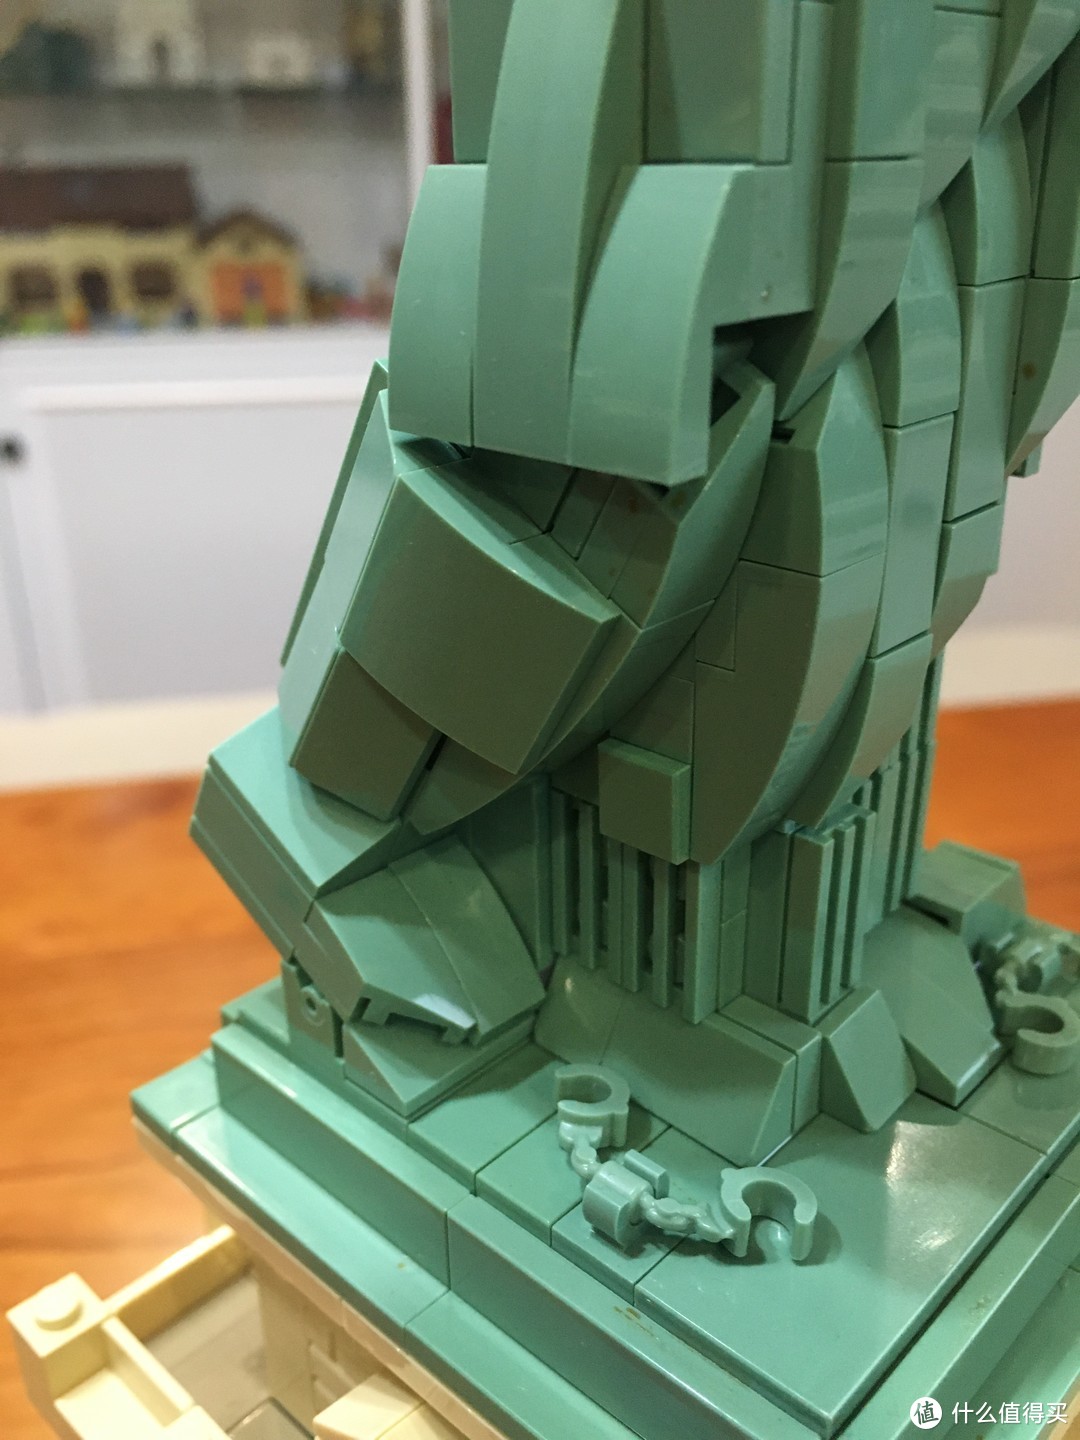 LEGO 乐高 建筑系列 21042 自由女神像和40367自由女神像方头仔